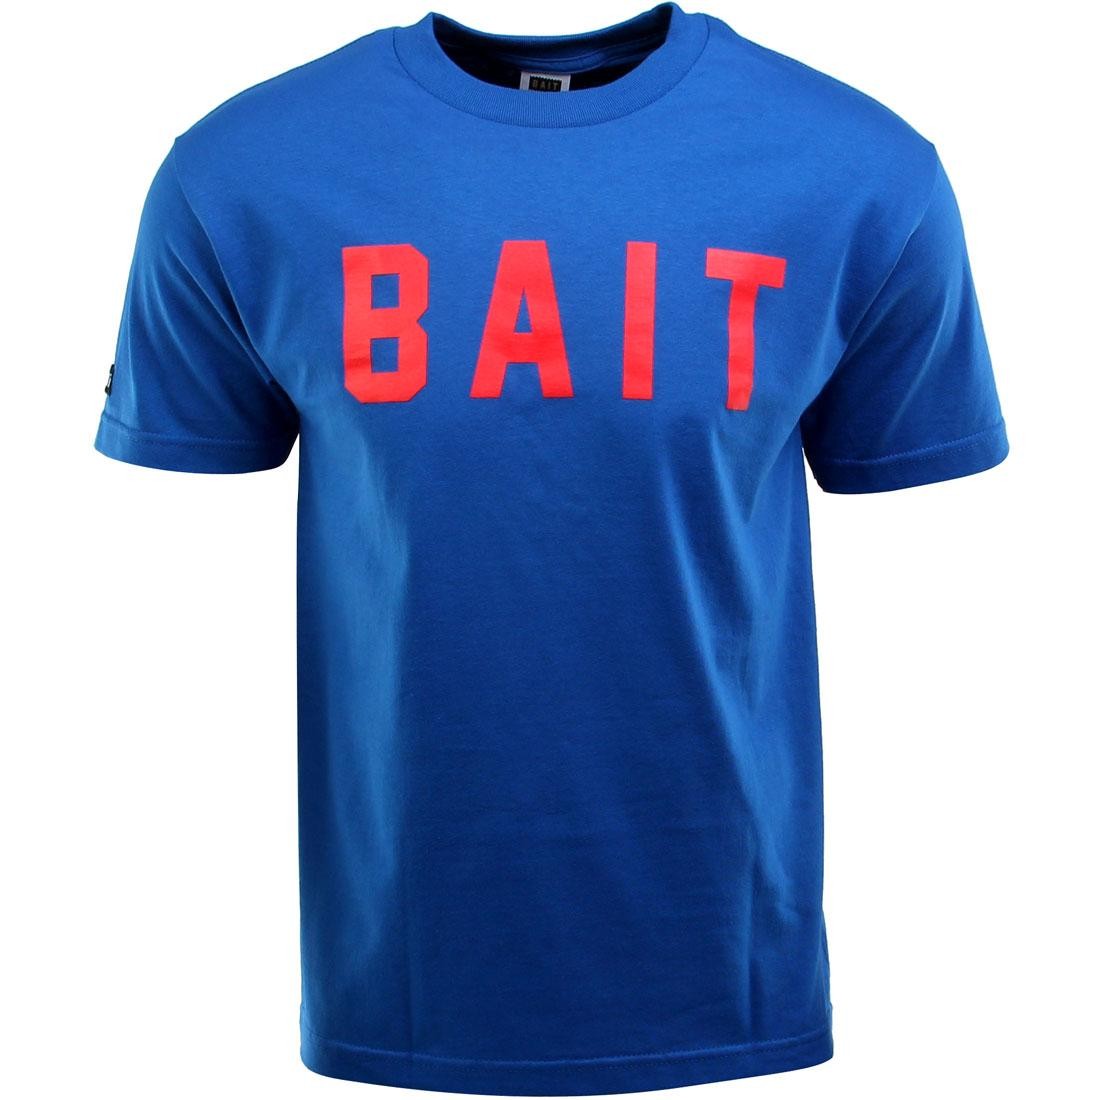 BAIT Logo Tee (blue / royal blue / red)